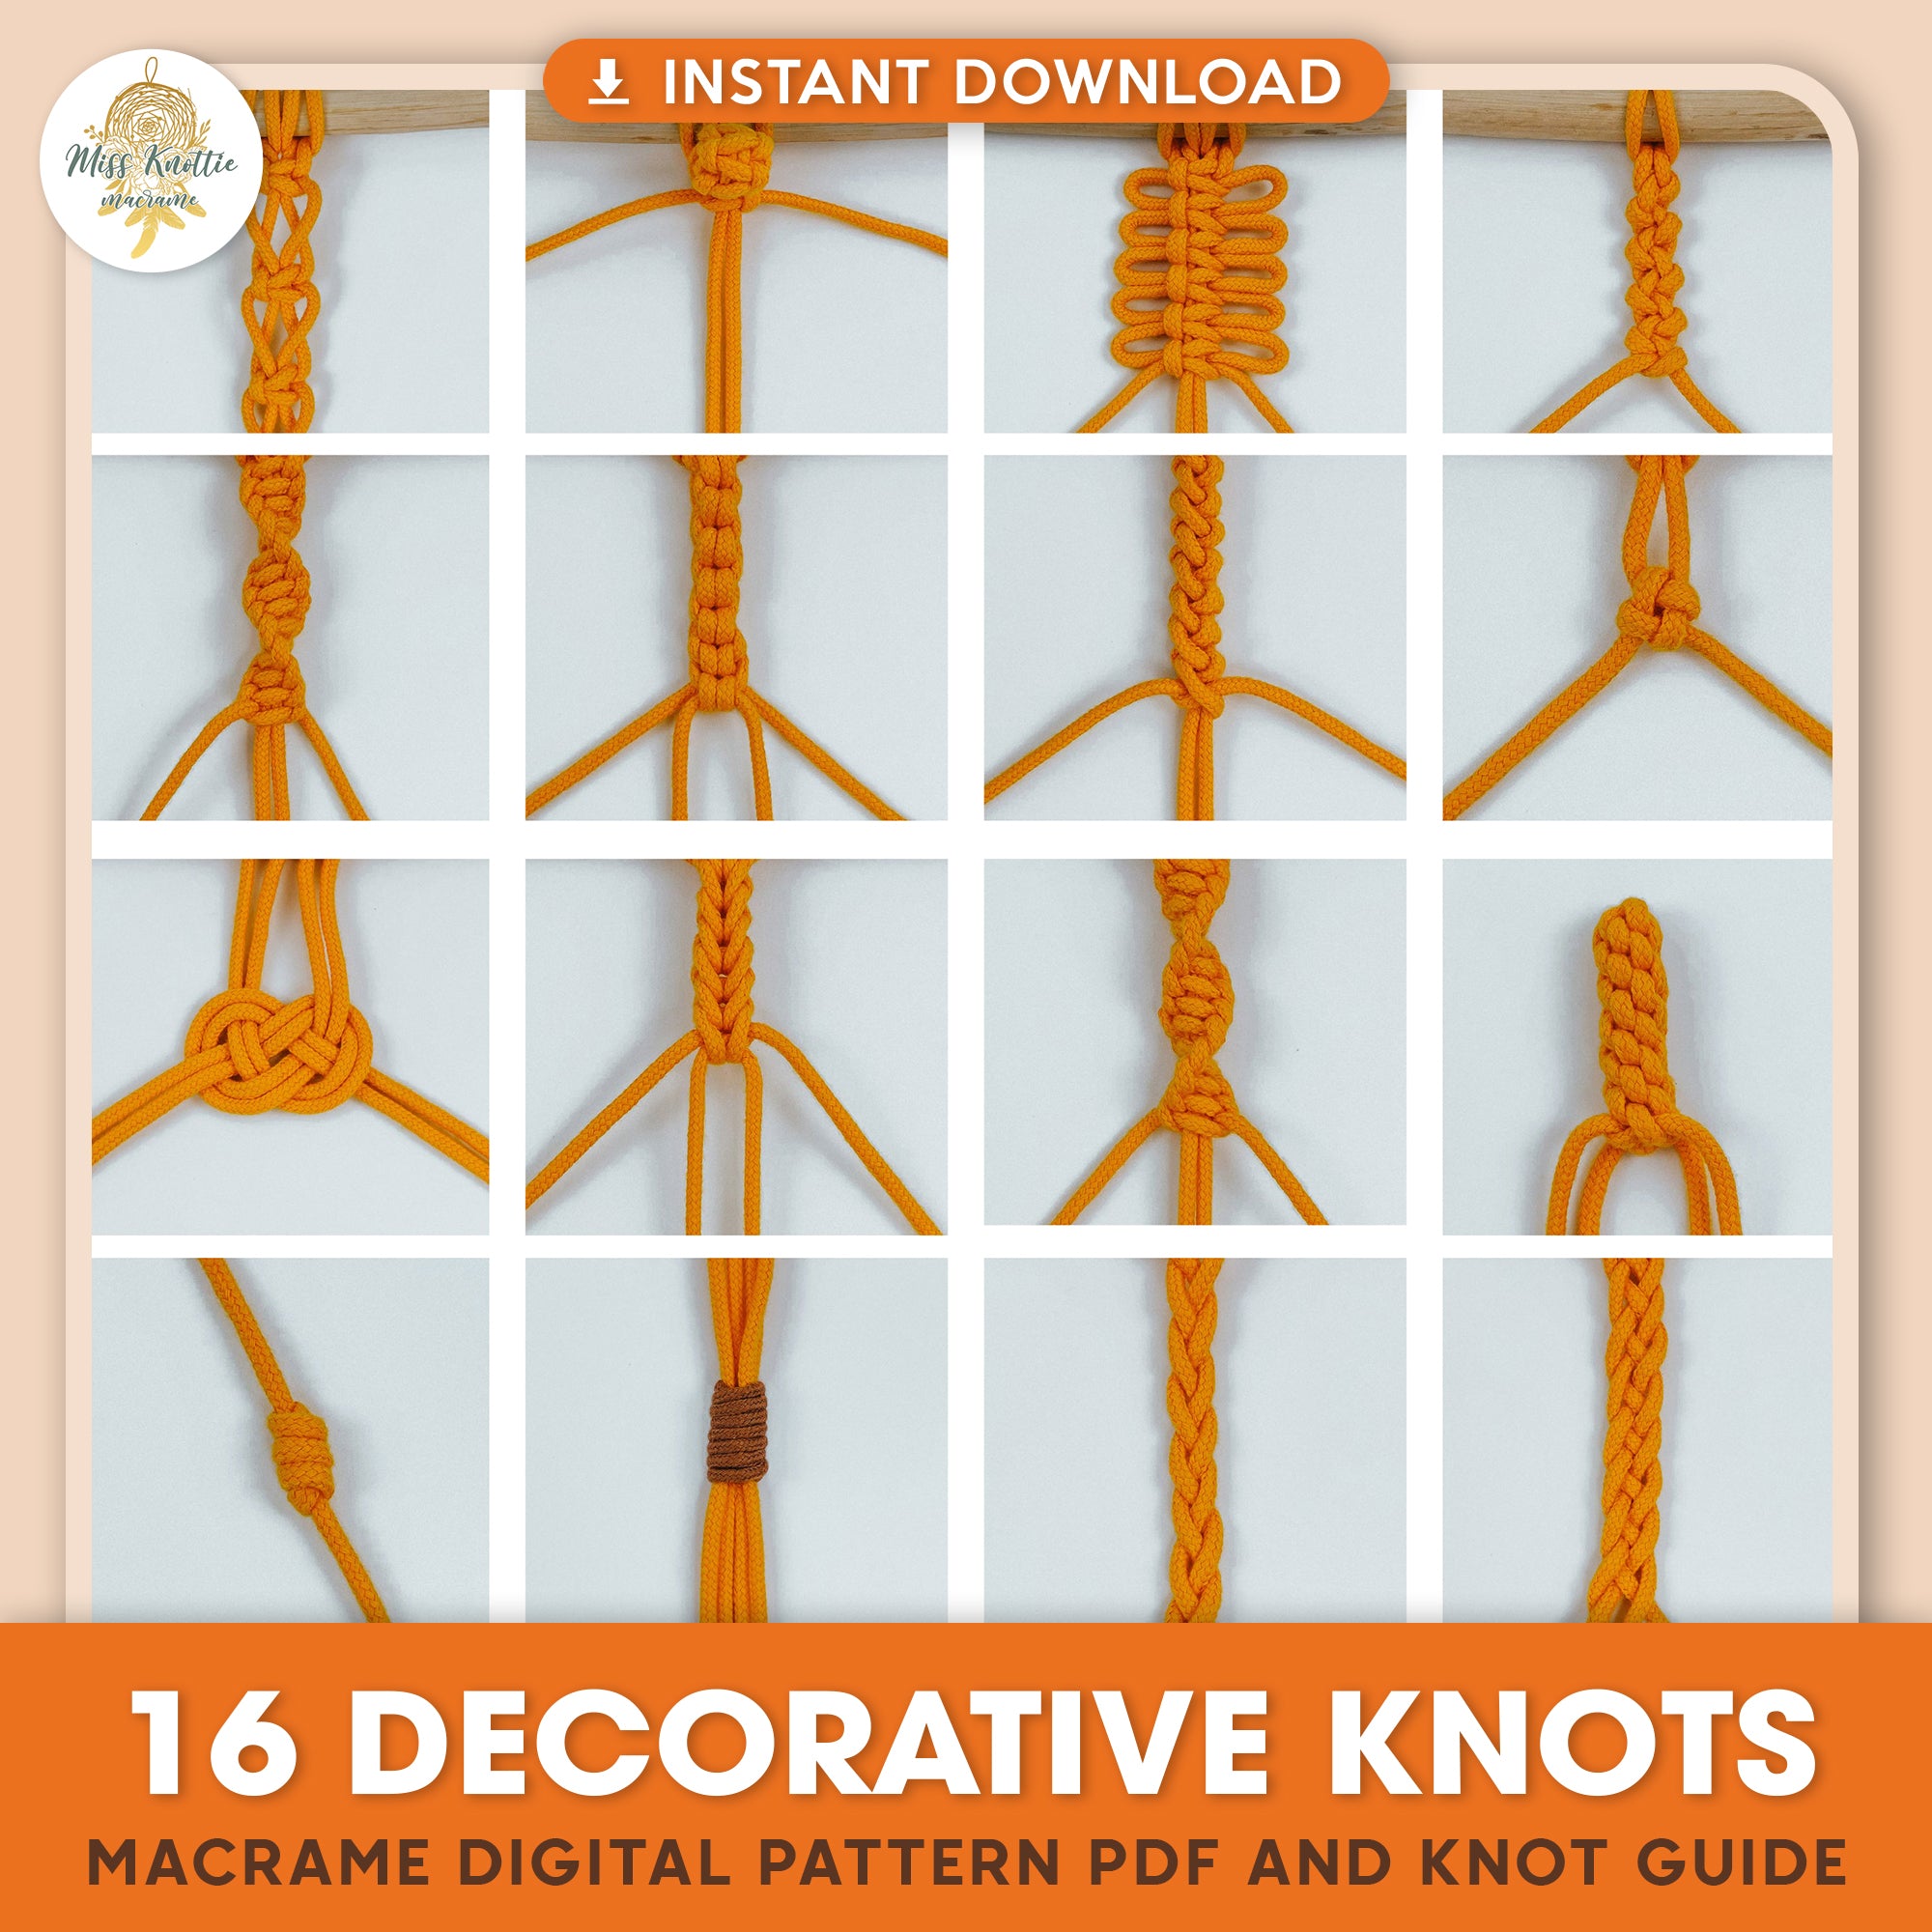 16 Macrame Decorative Knots - Digital PDF and Knot Guide